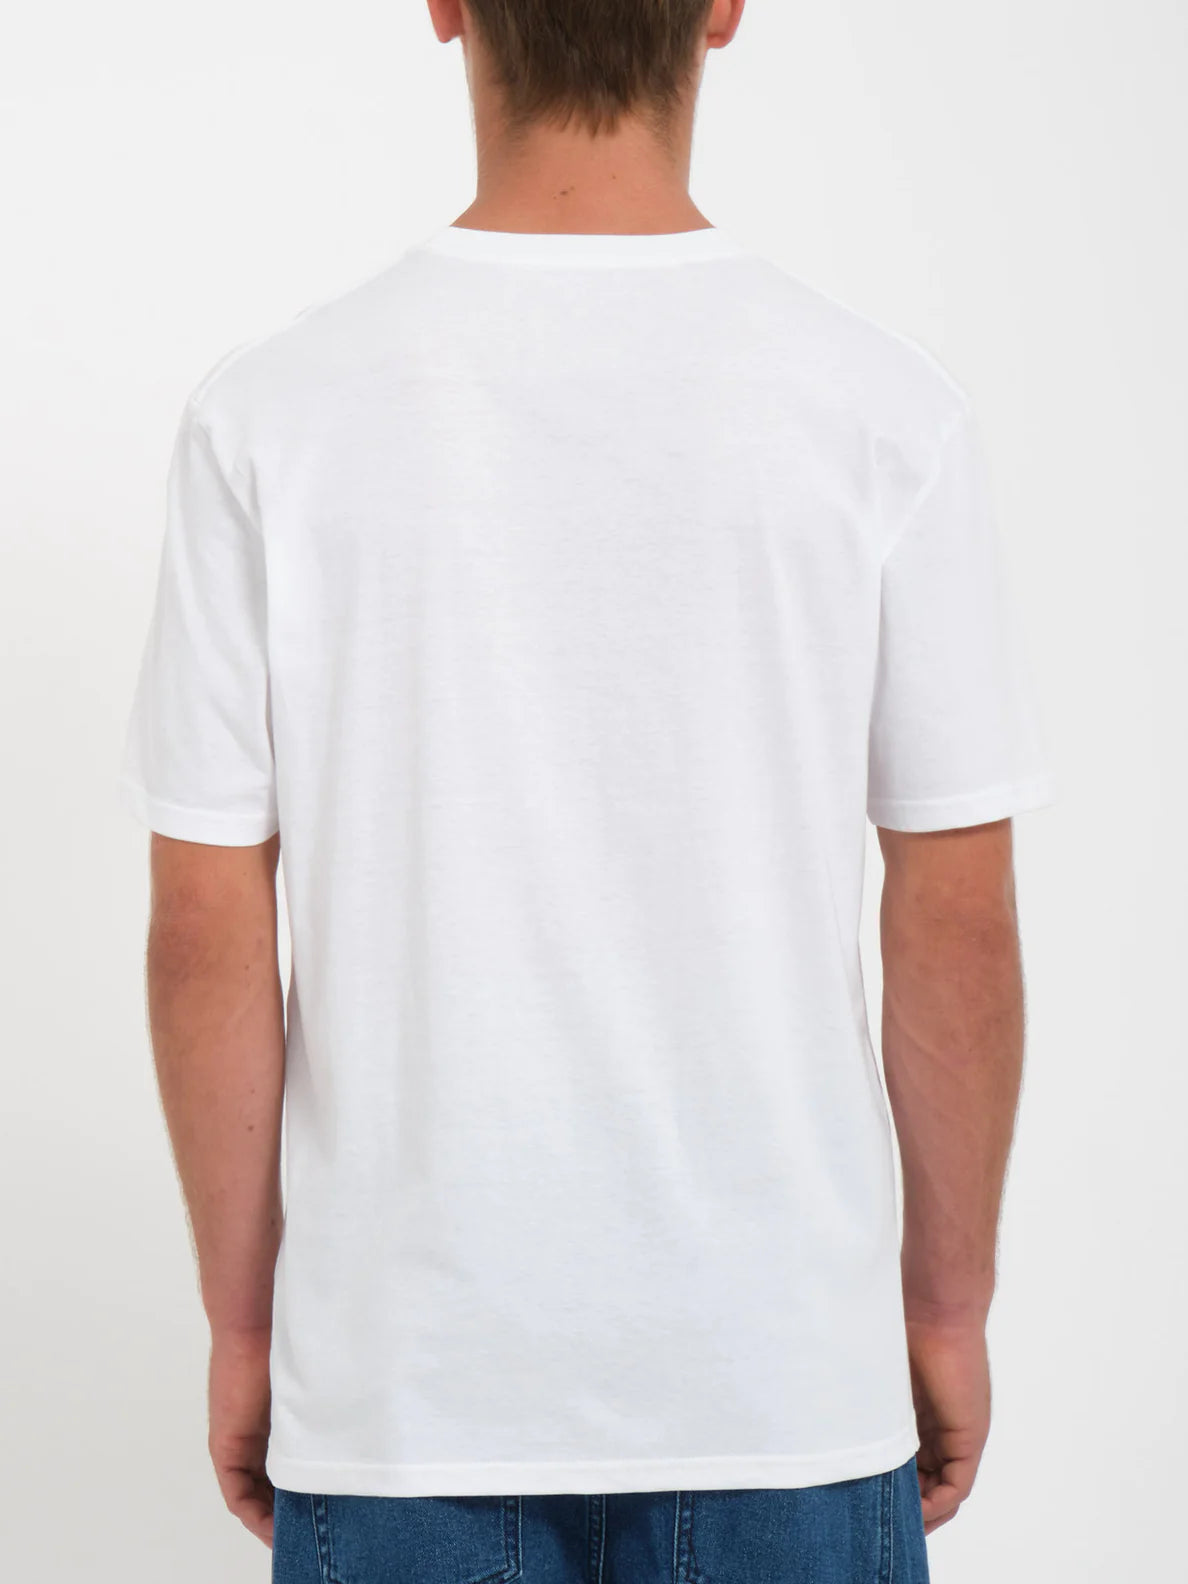 Camiseta Volcom Herbie - White